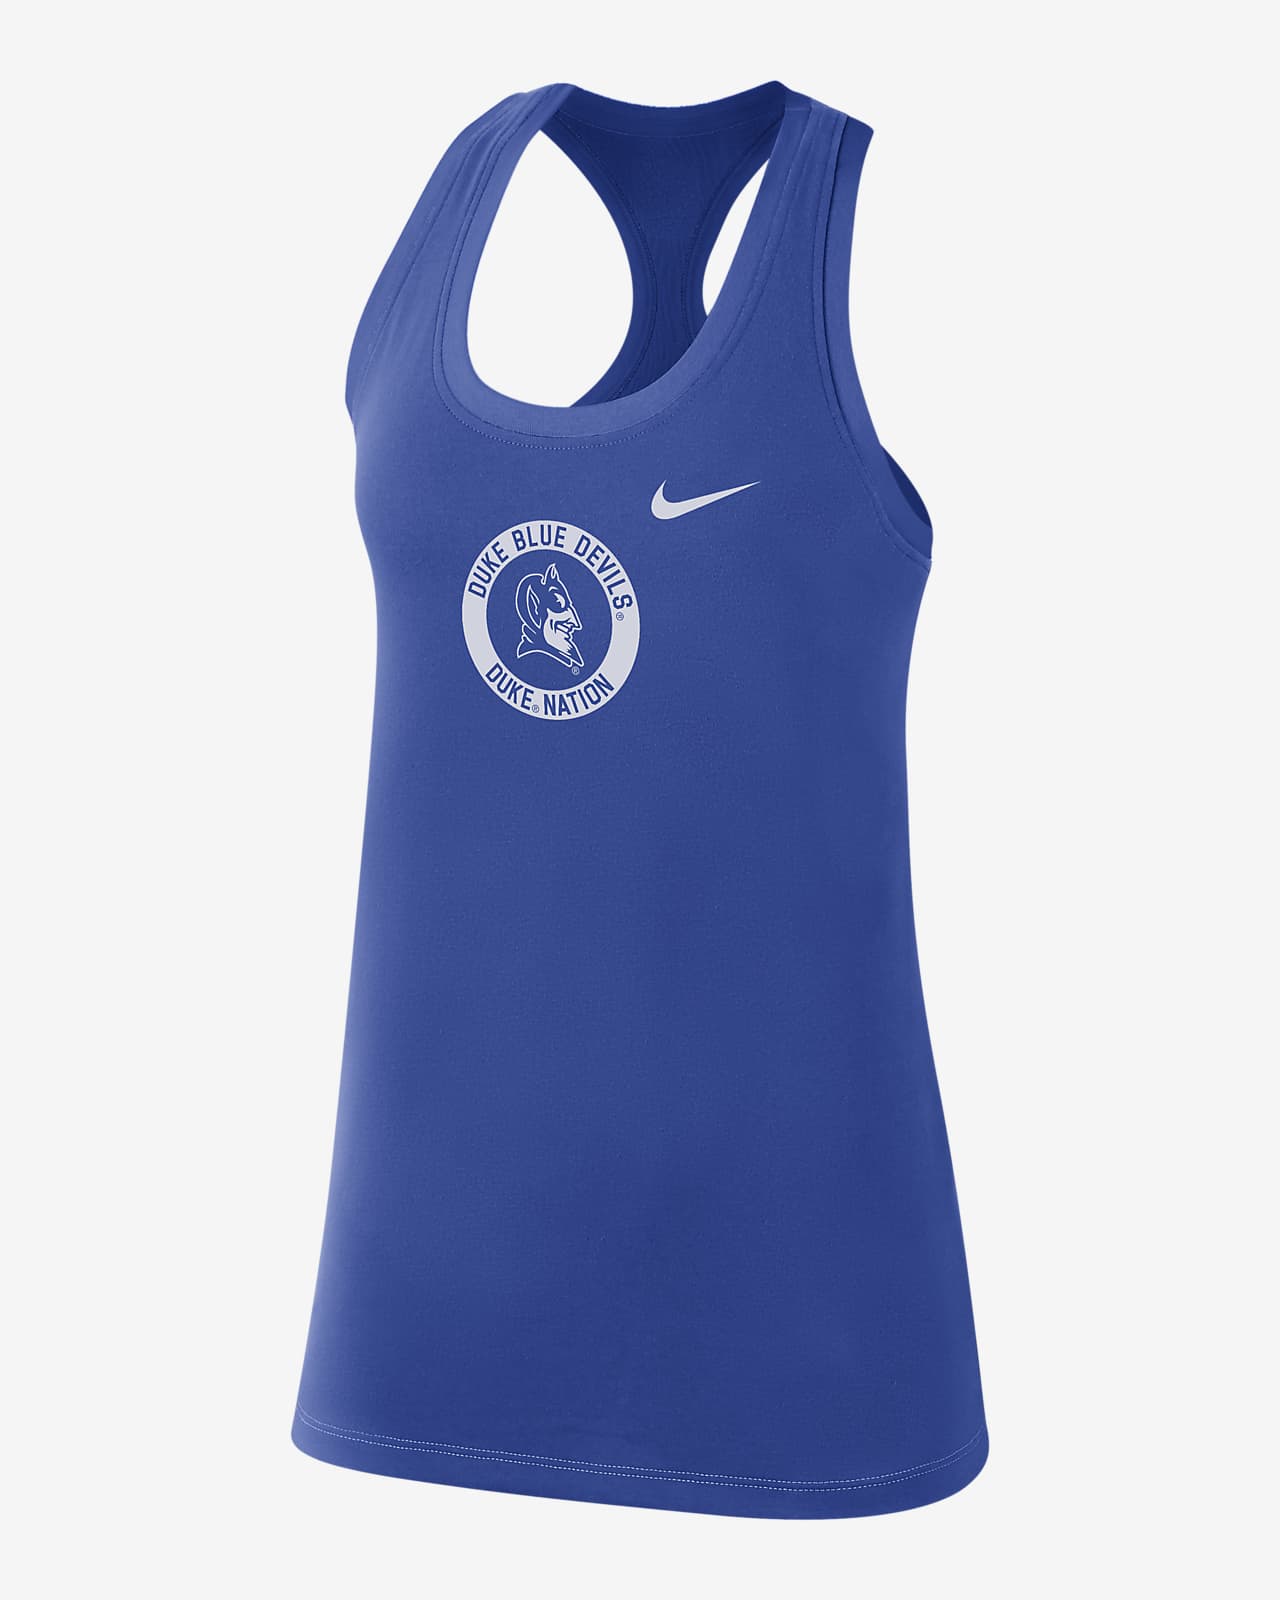 Camiseta de tirantes universitaria Nike para mujer Duke